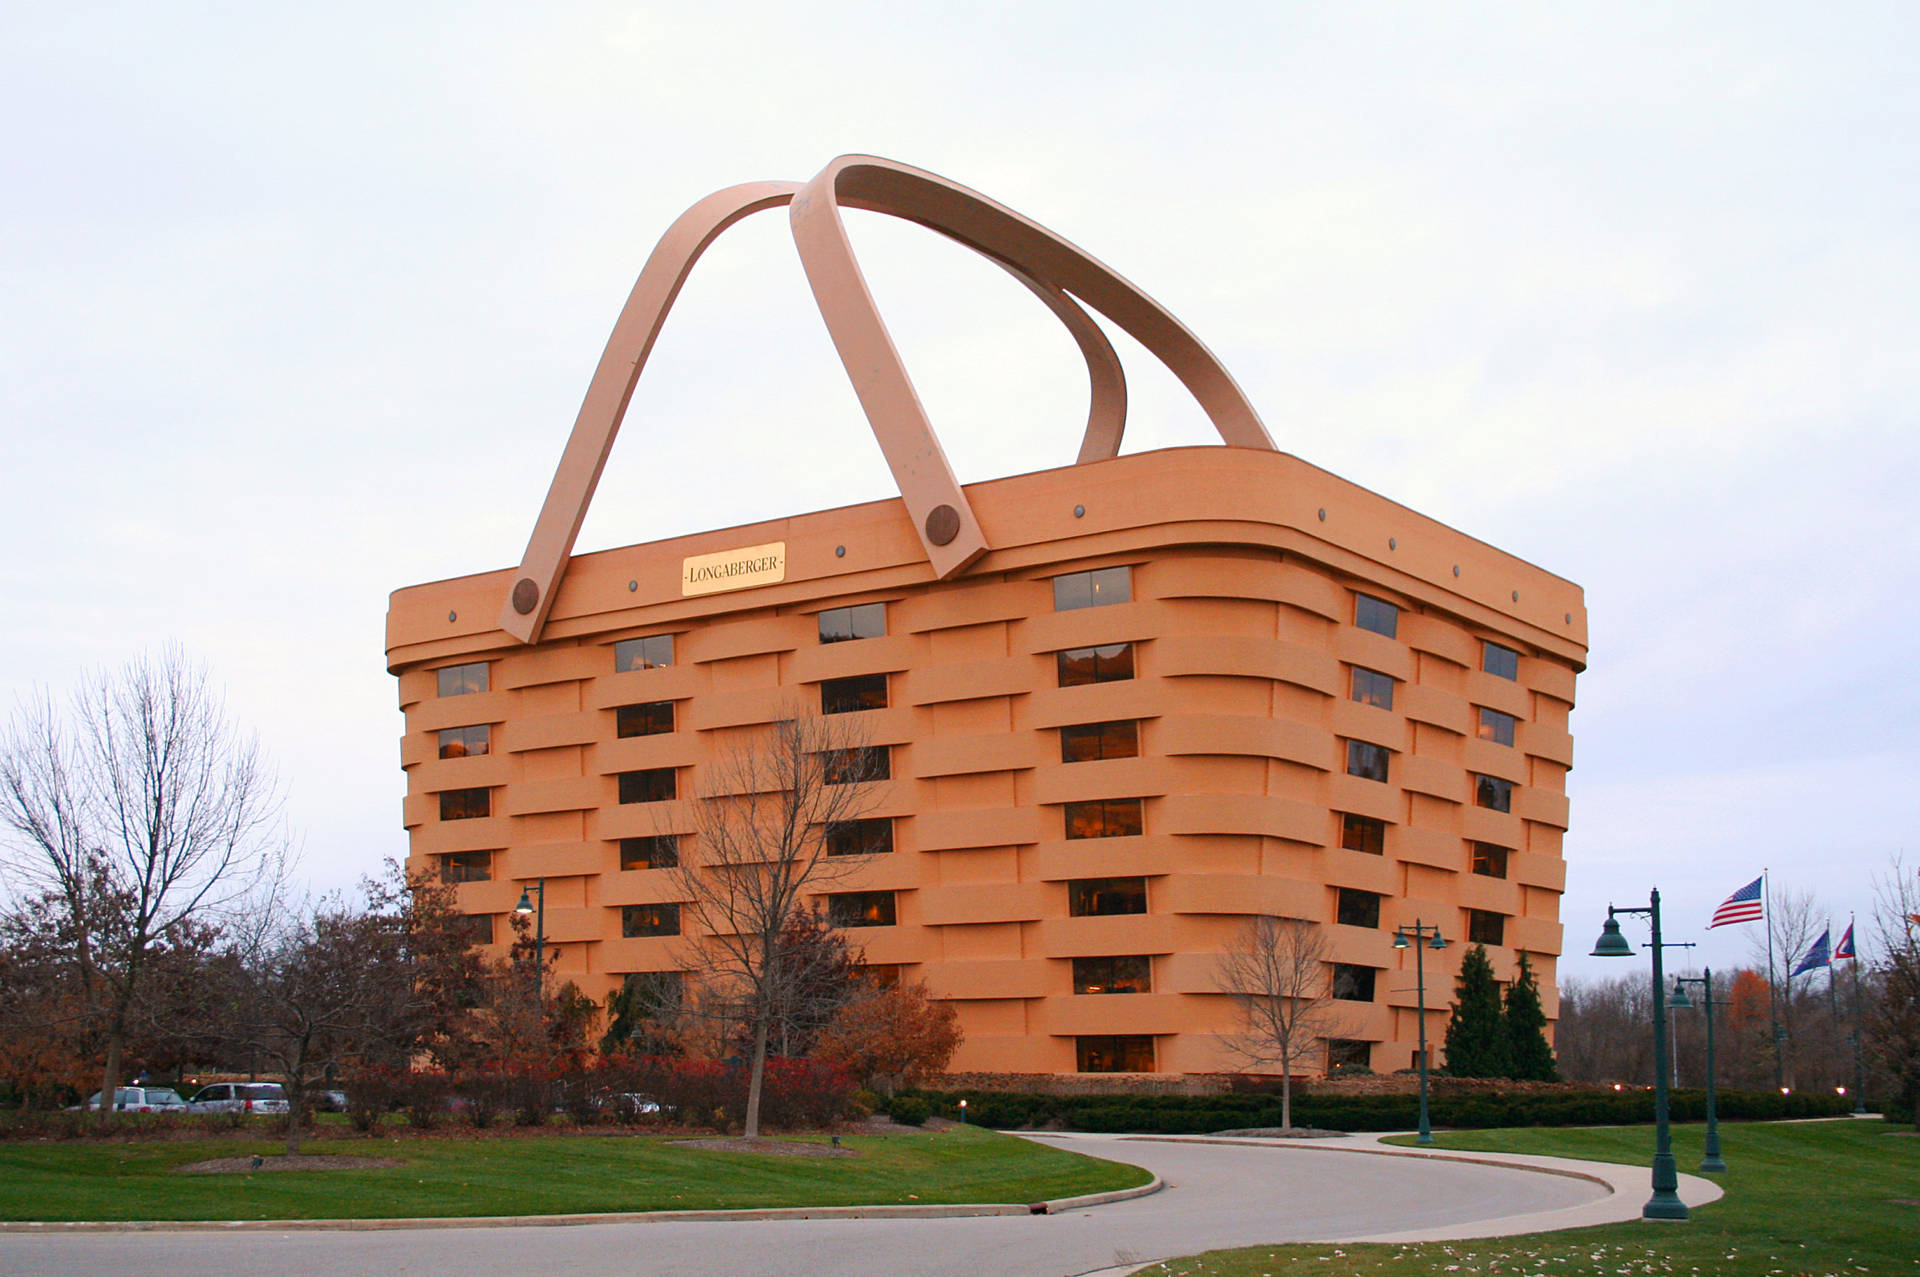 Big Basket Building Wallpaper